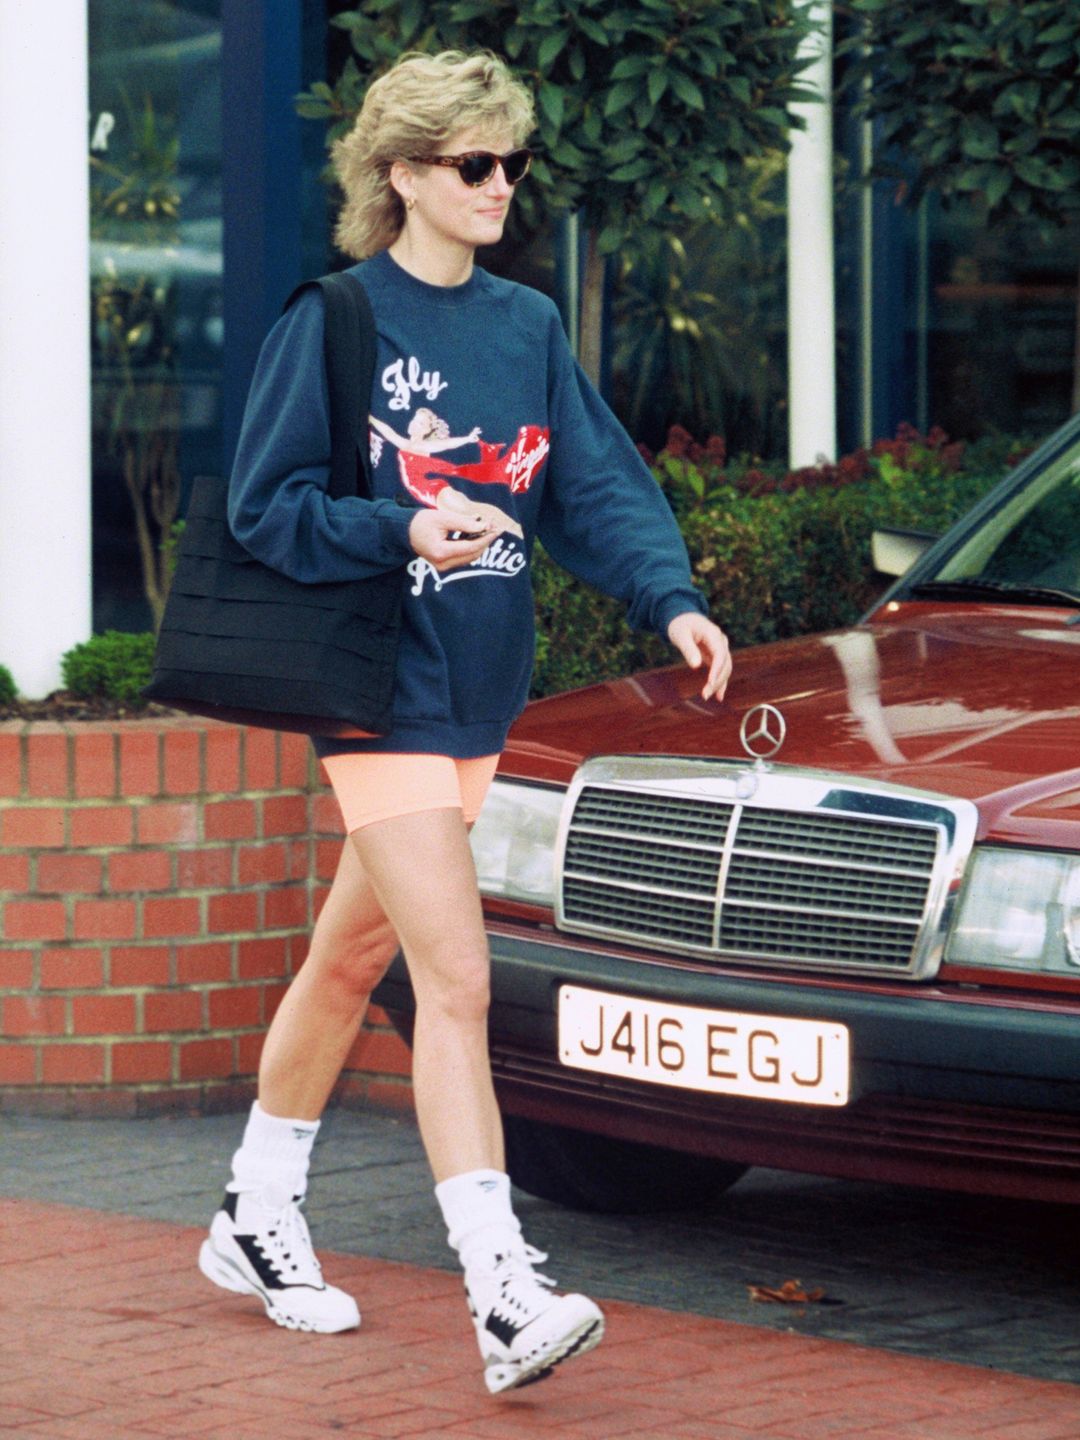 Princess Diana, Princess of Wales styles a navy Virgin Atlantic sweatshirt alongside orange cycling shorts 